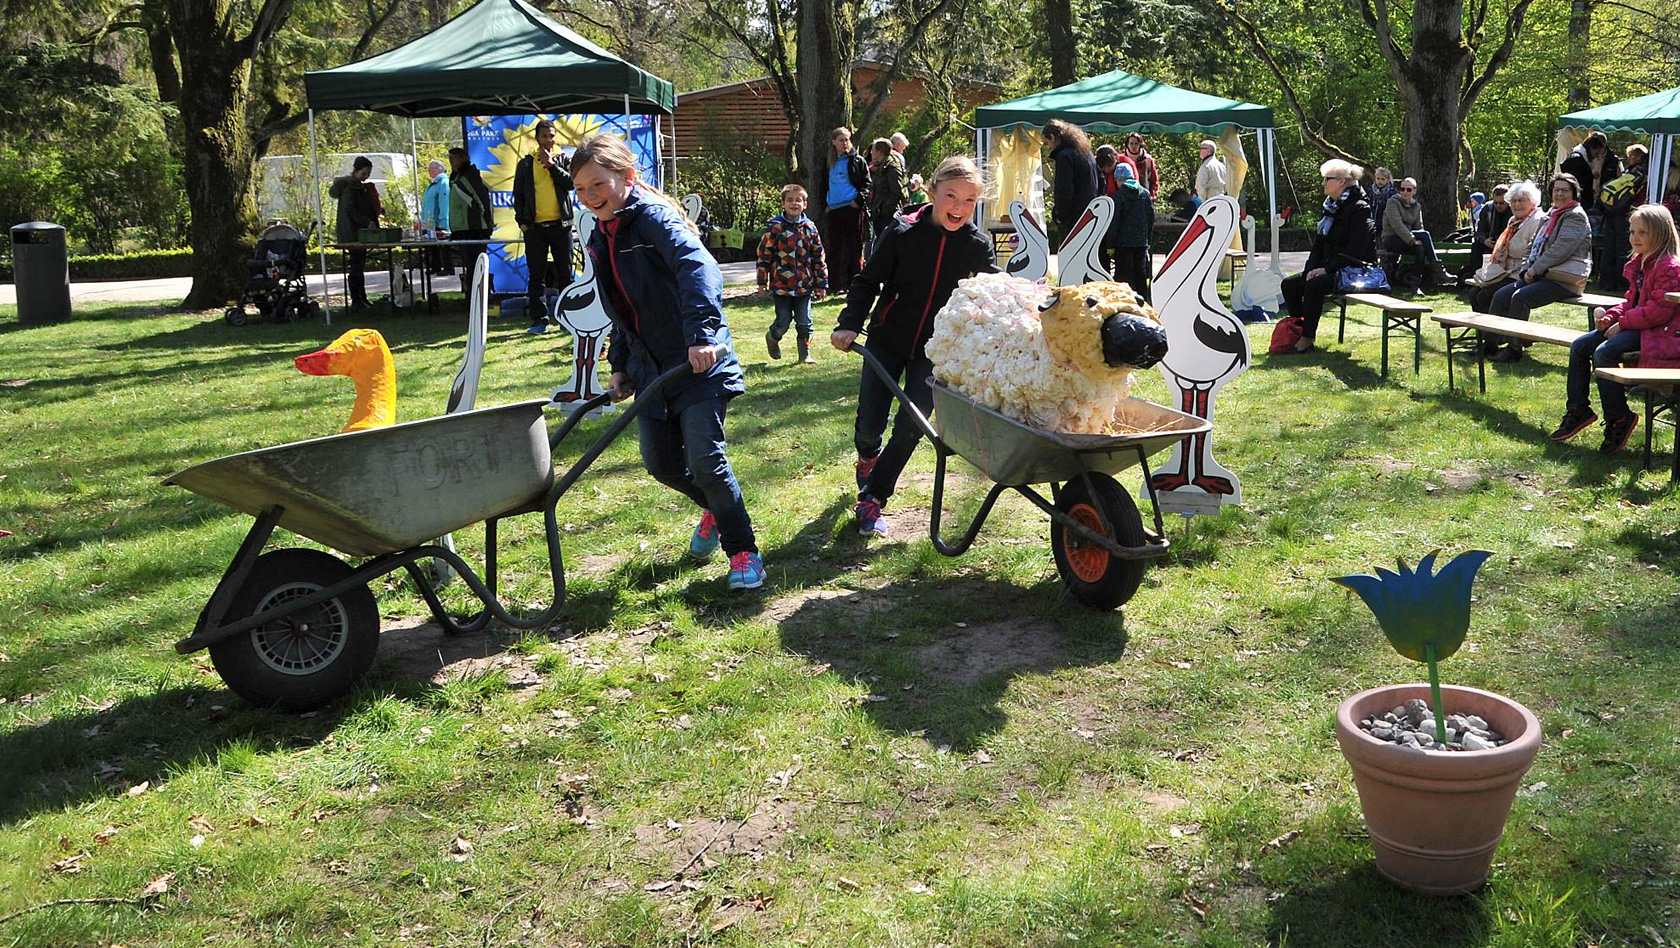 Zoo Rostock - Schubkarrenrennen beim Frühlingsfest 2017